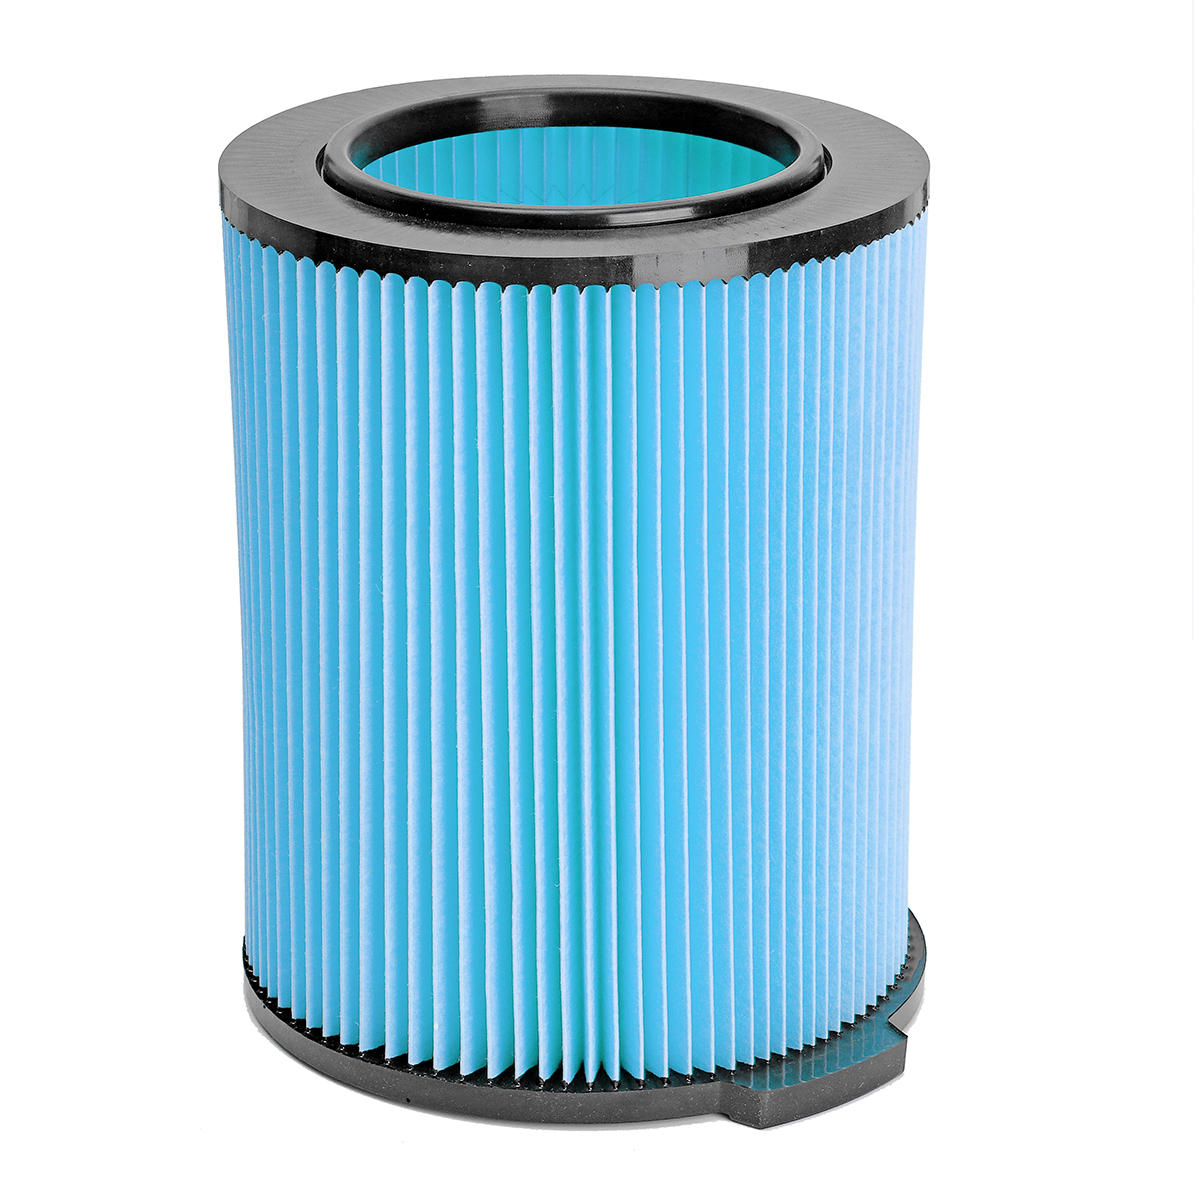 Natte / droge stofzuiger filterelement vervangen voor Ridgid VF5000 6-20 gallon